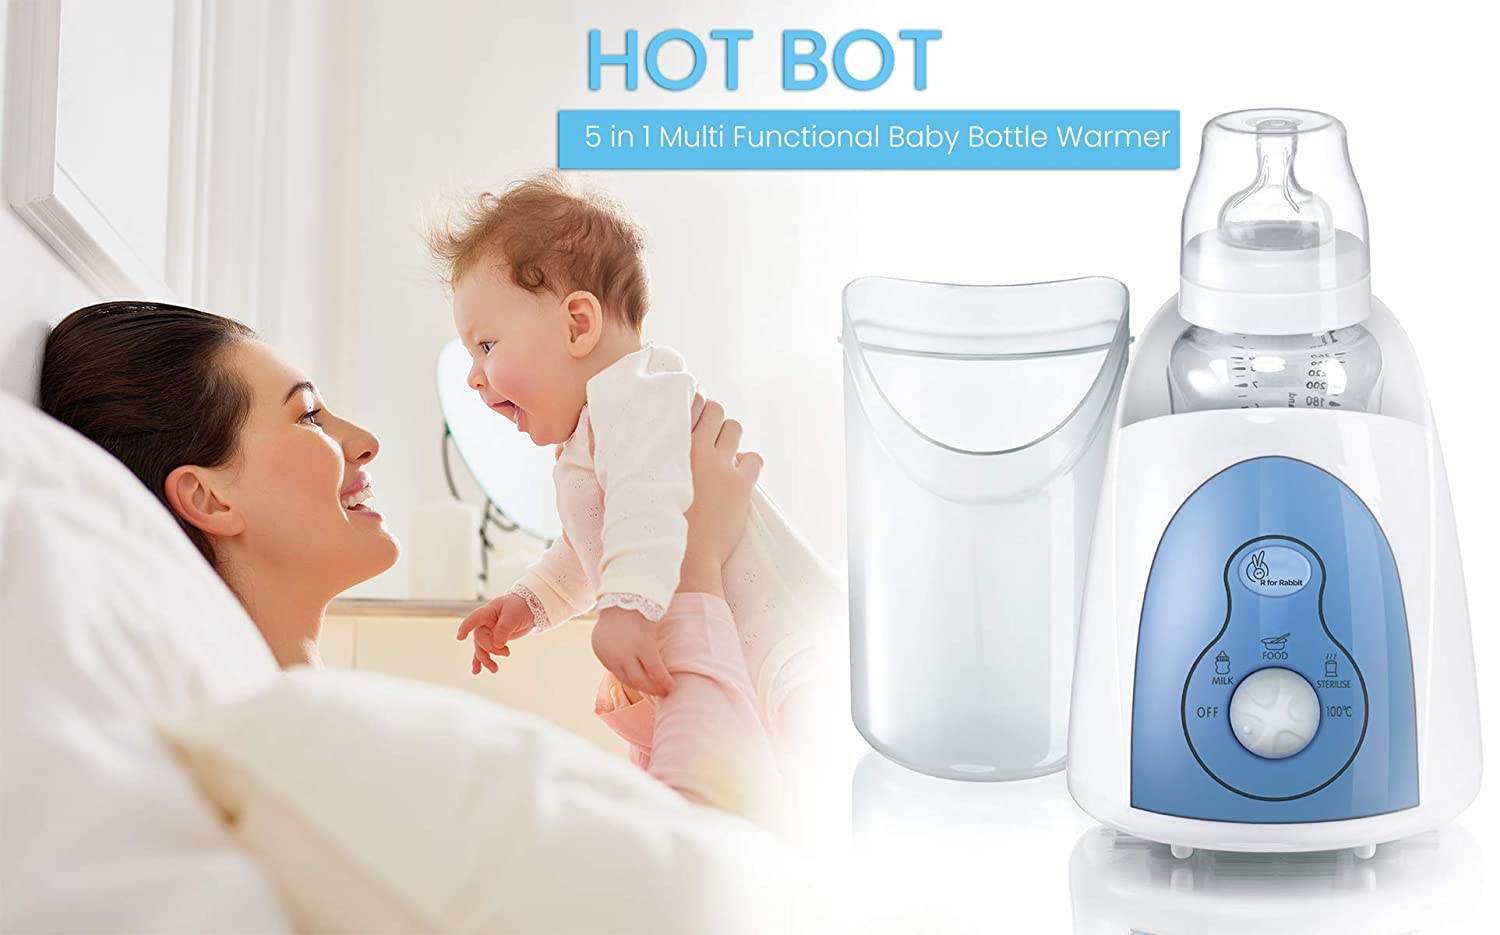 R for Rabbit Hot Bot - 5 in 1 Multi-functional Baby Bottle Warmer